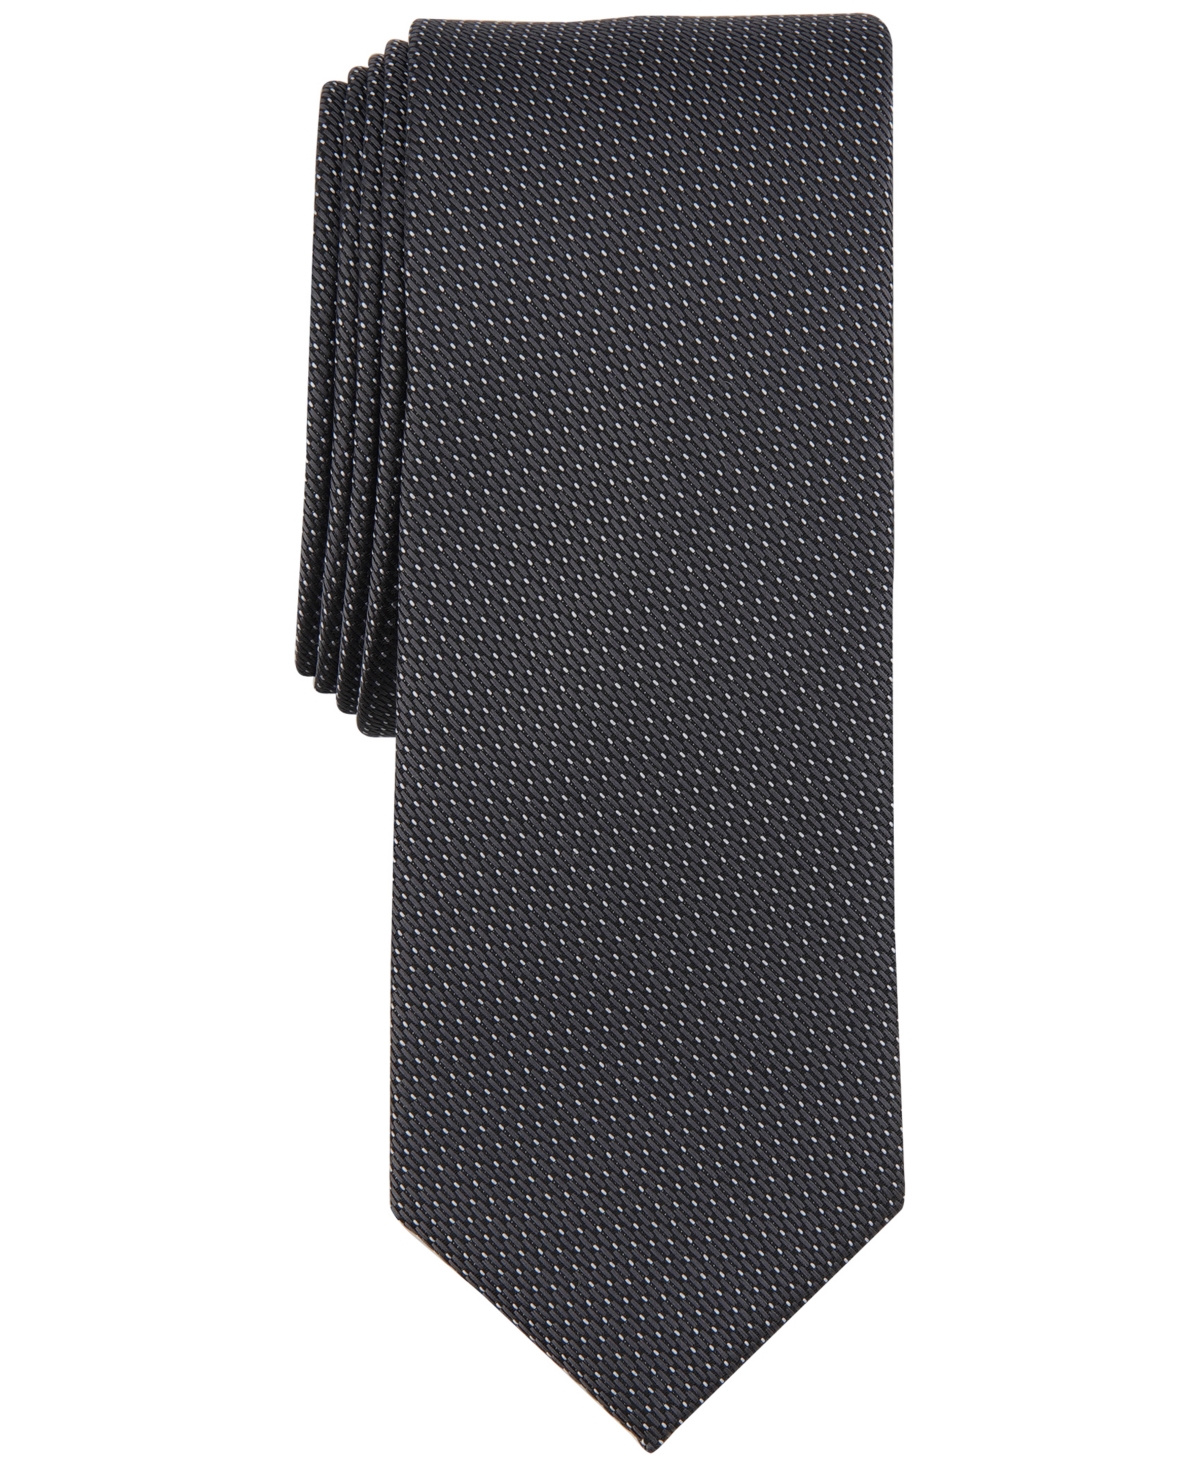 Men's White Pin-Dot Tie, Created for Macy's - Black